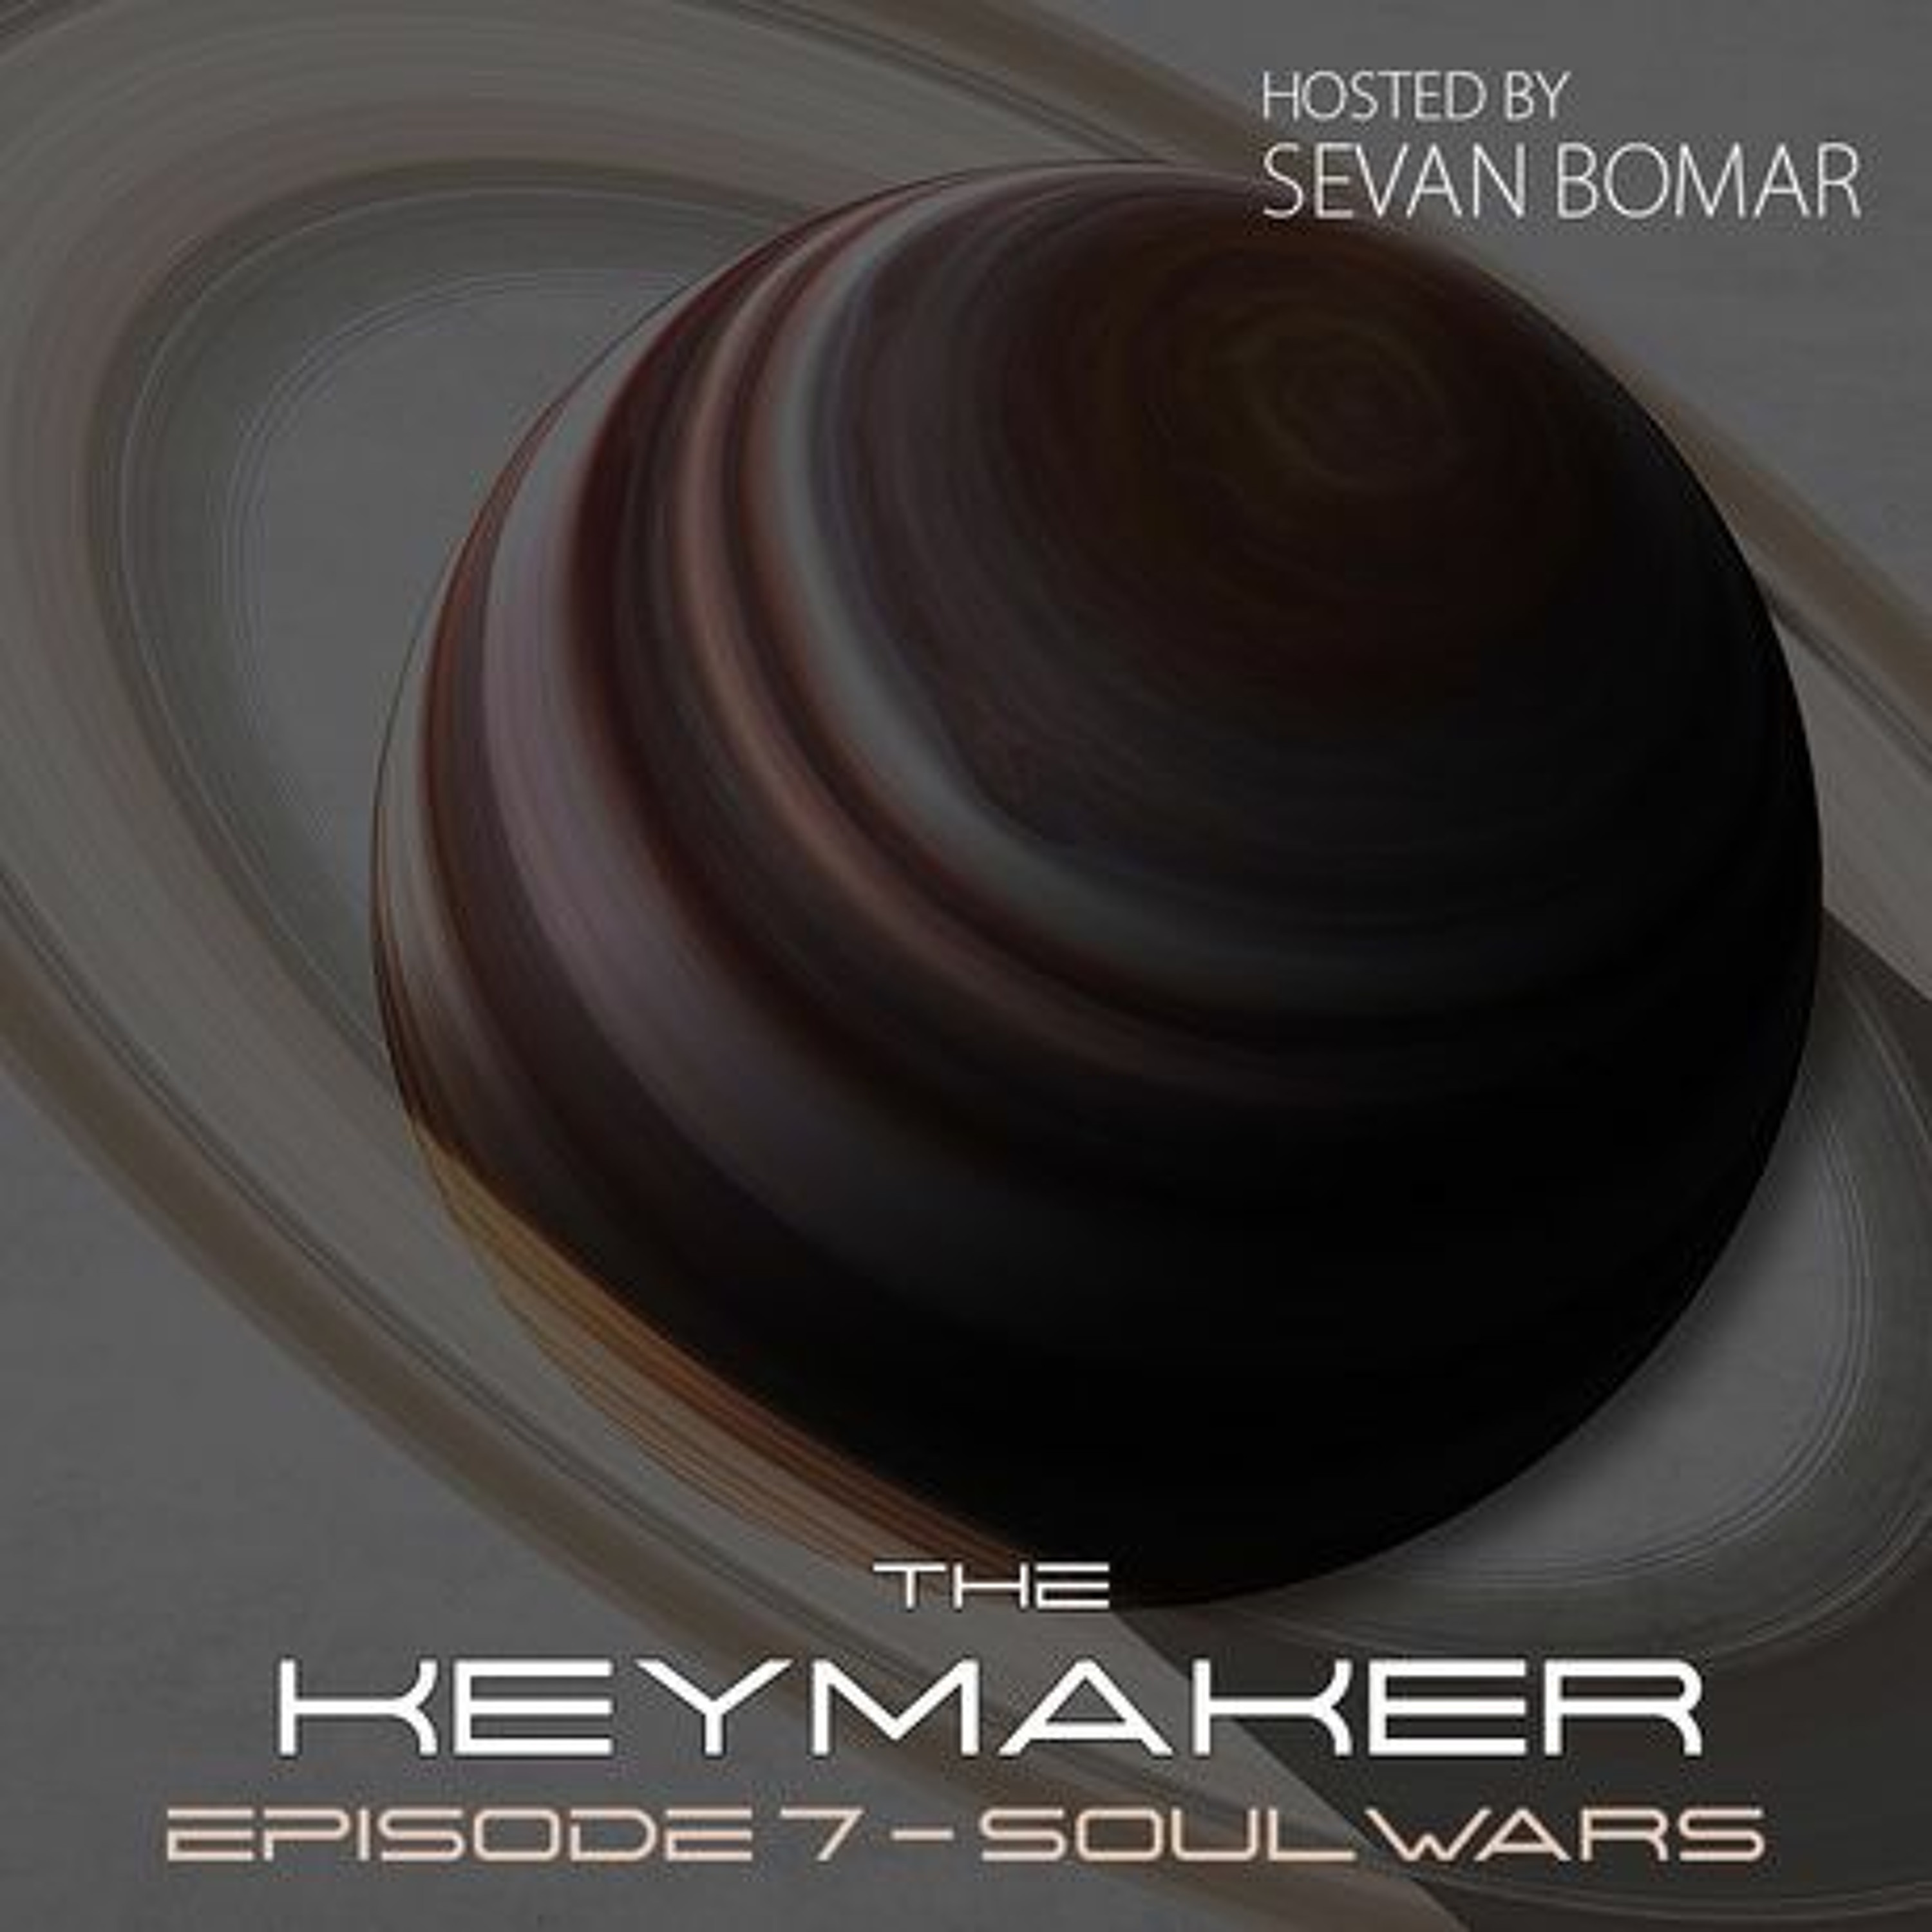 SEVAN BOMAR - THE KEYMAKER, EPISODE 7 - SOUL WARS - DEC 19 2015